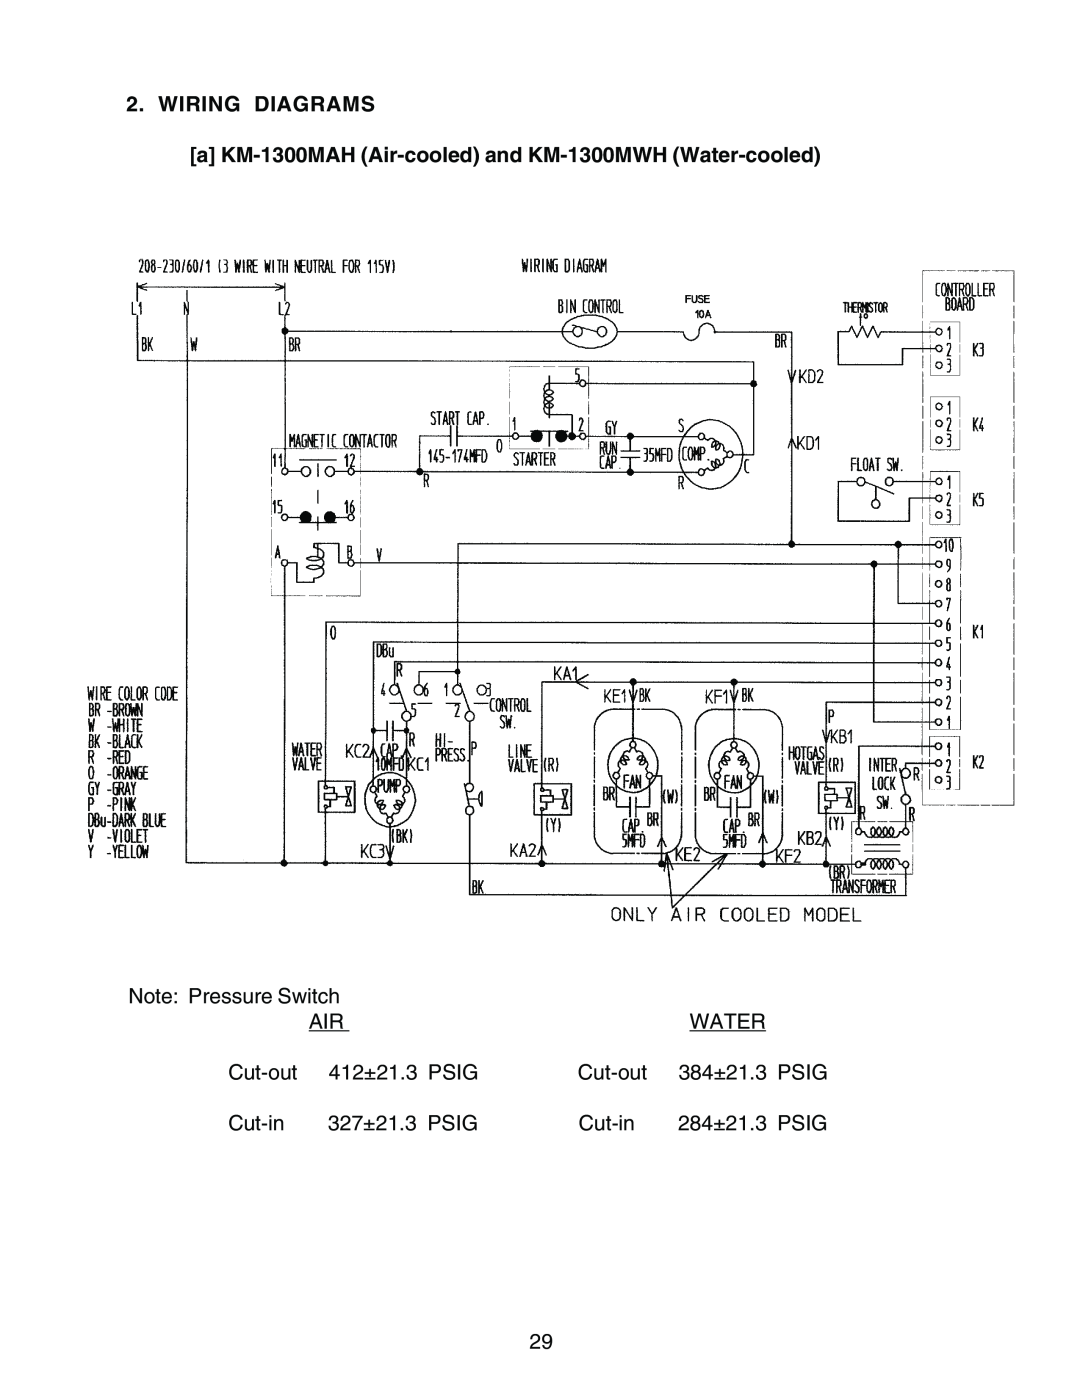 Hoshizaki KM-1300MRH service manual Wiring Diagrams, aKM-1300MAH Air-cooledand KM-1300MWH Water-cooled 